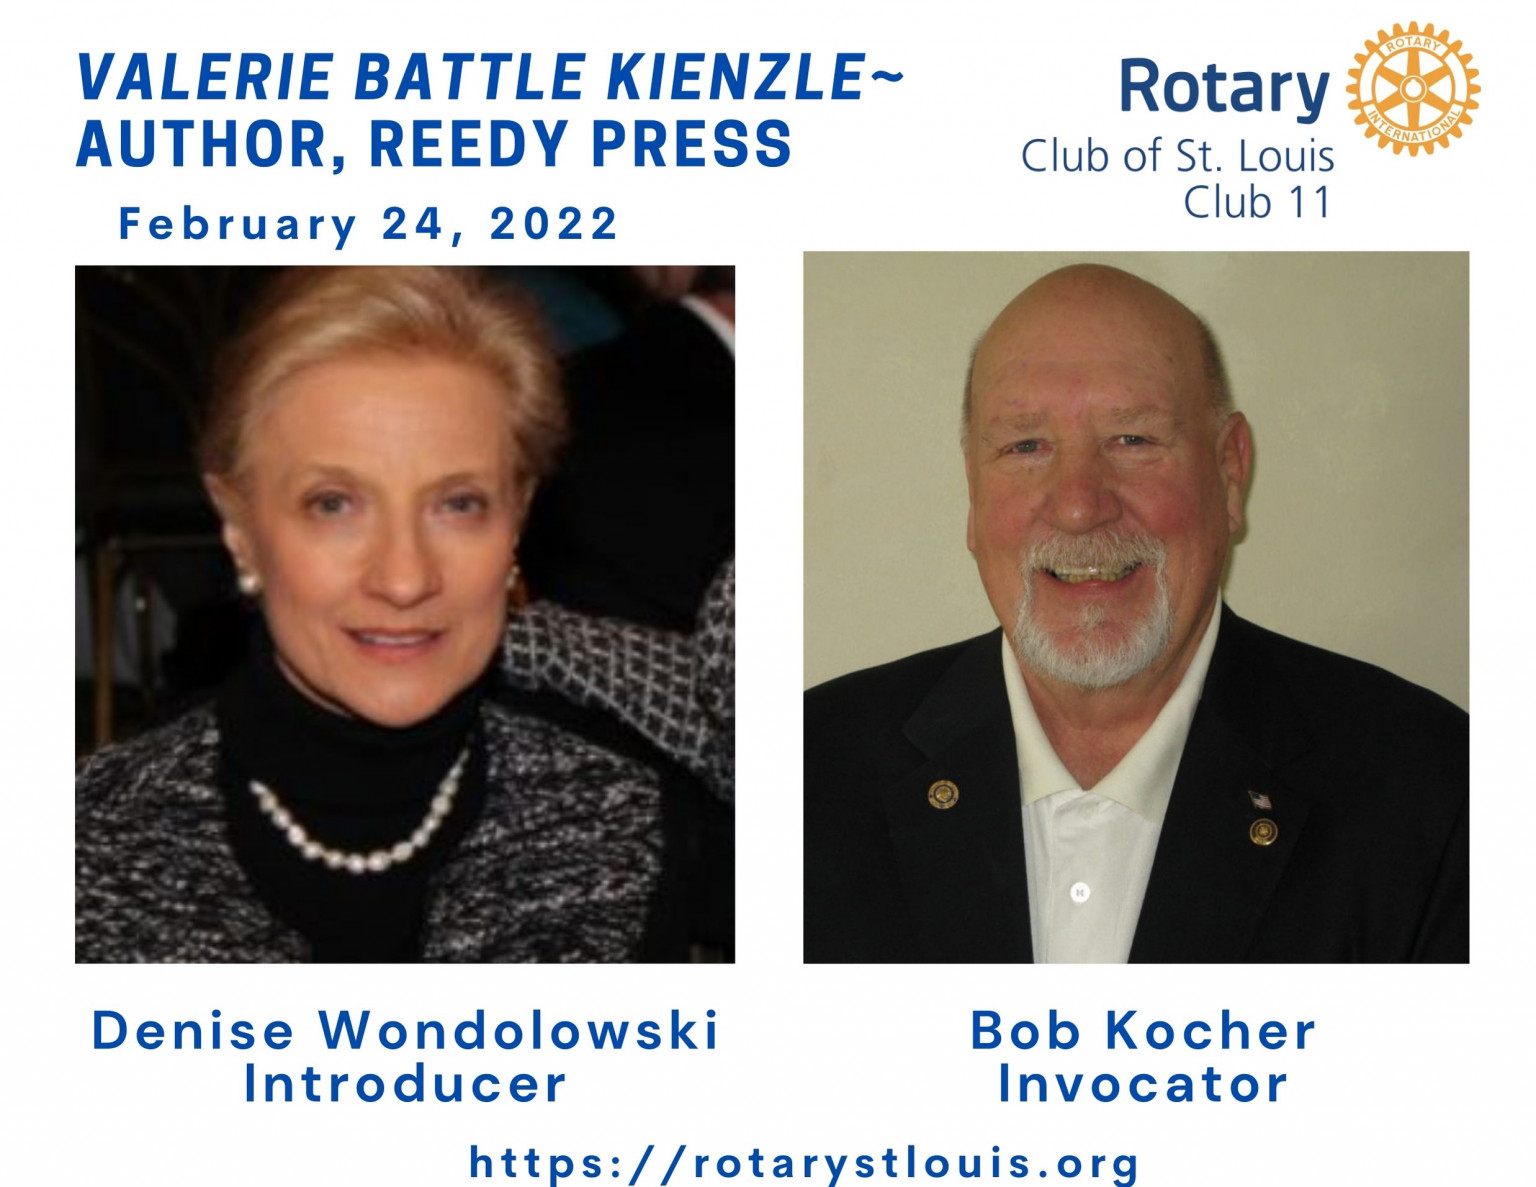 Denise Wondolowski, Introducer and Bob Kocher, Invocator 2-24-22 at St. Louis, Rotary Club